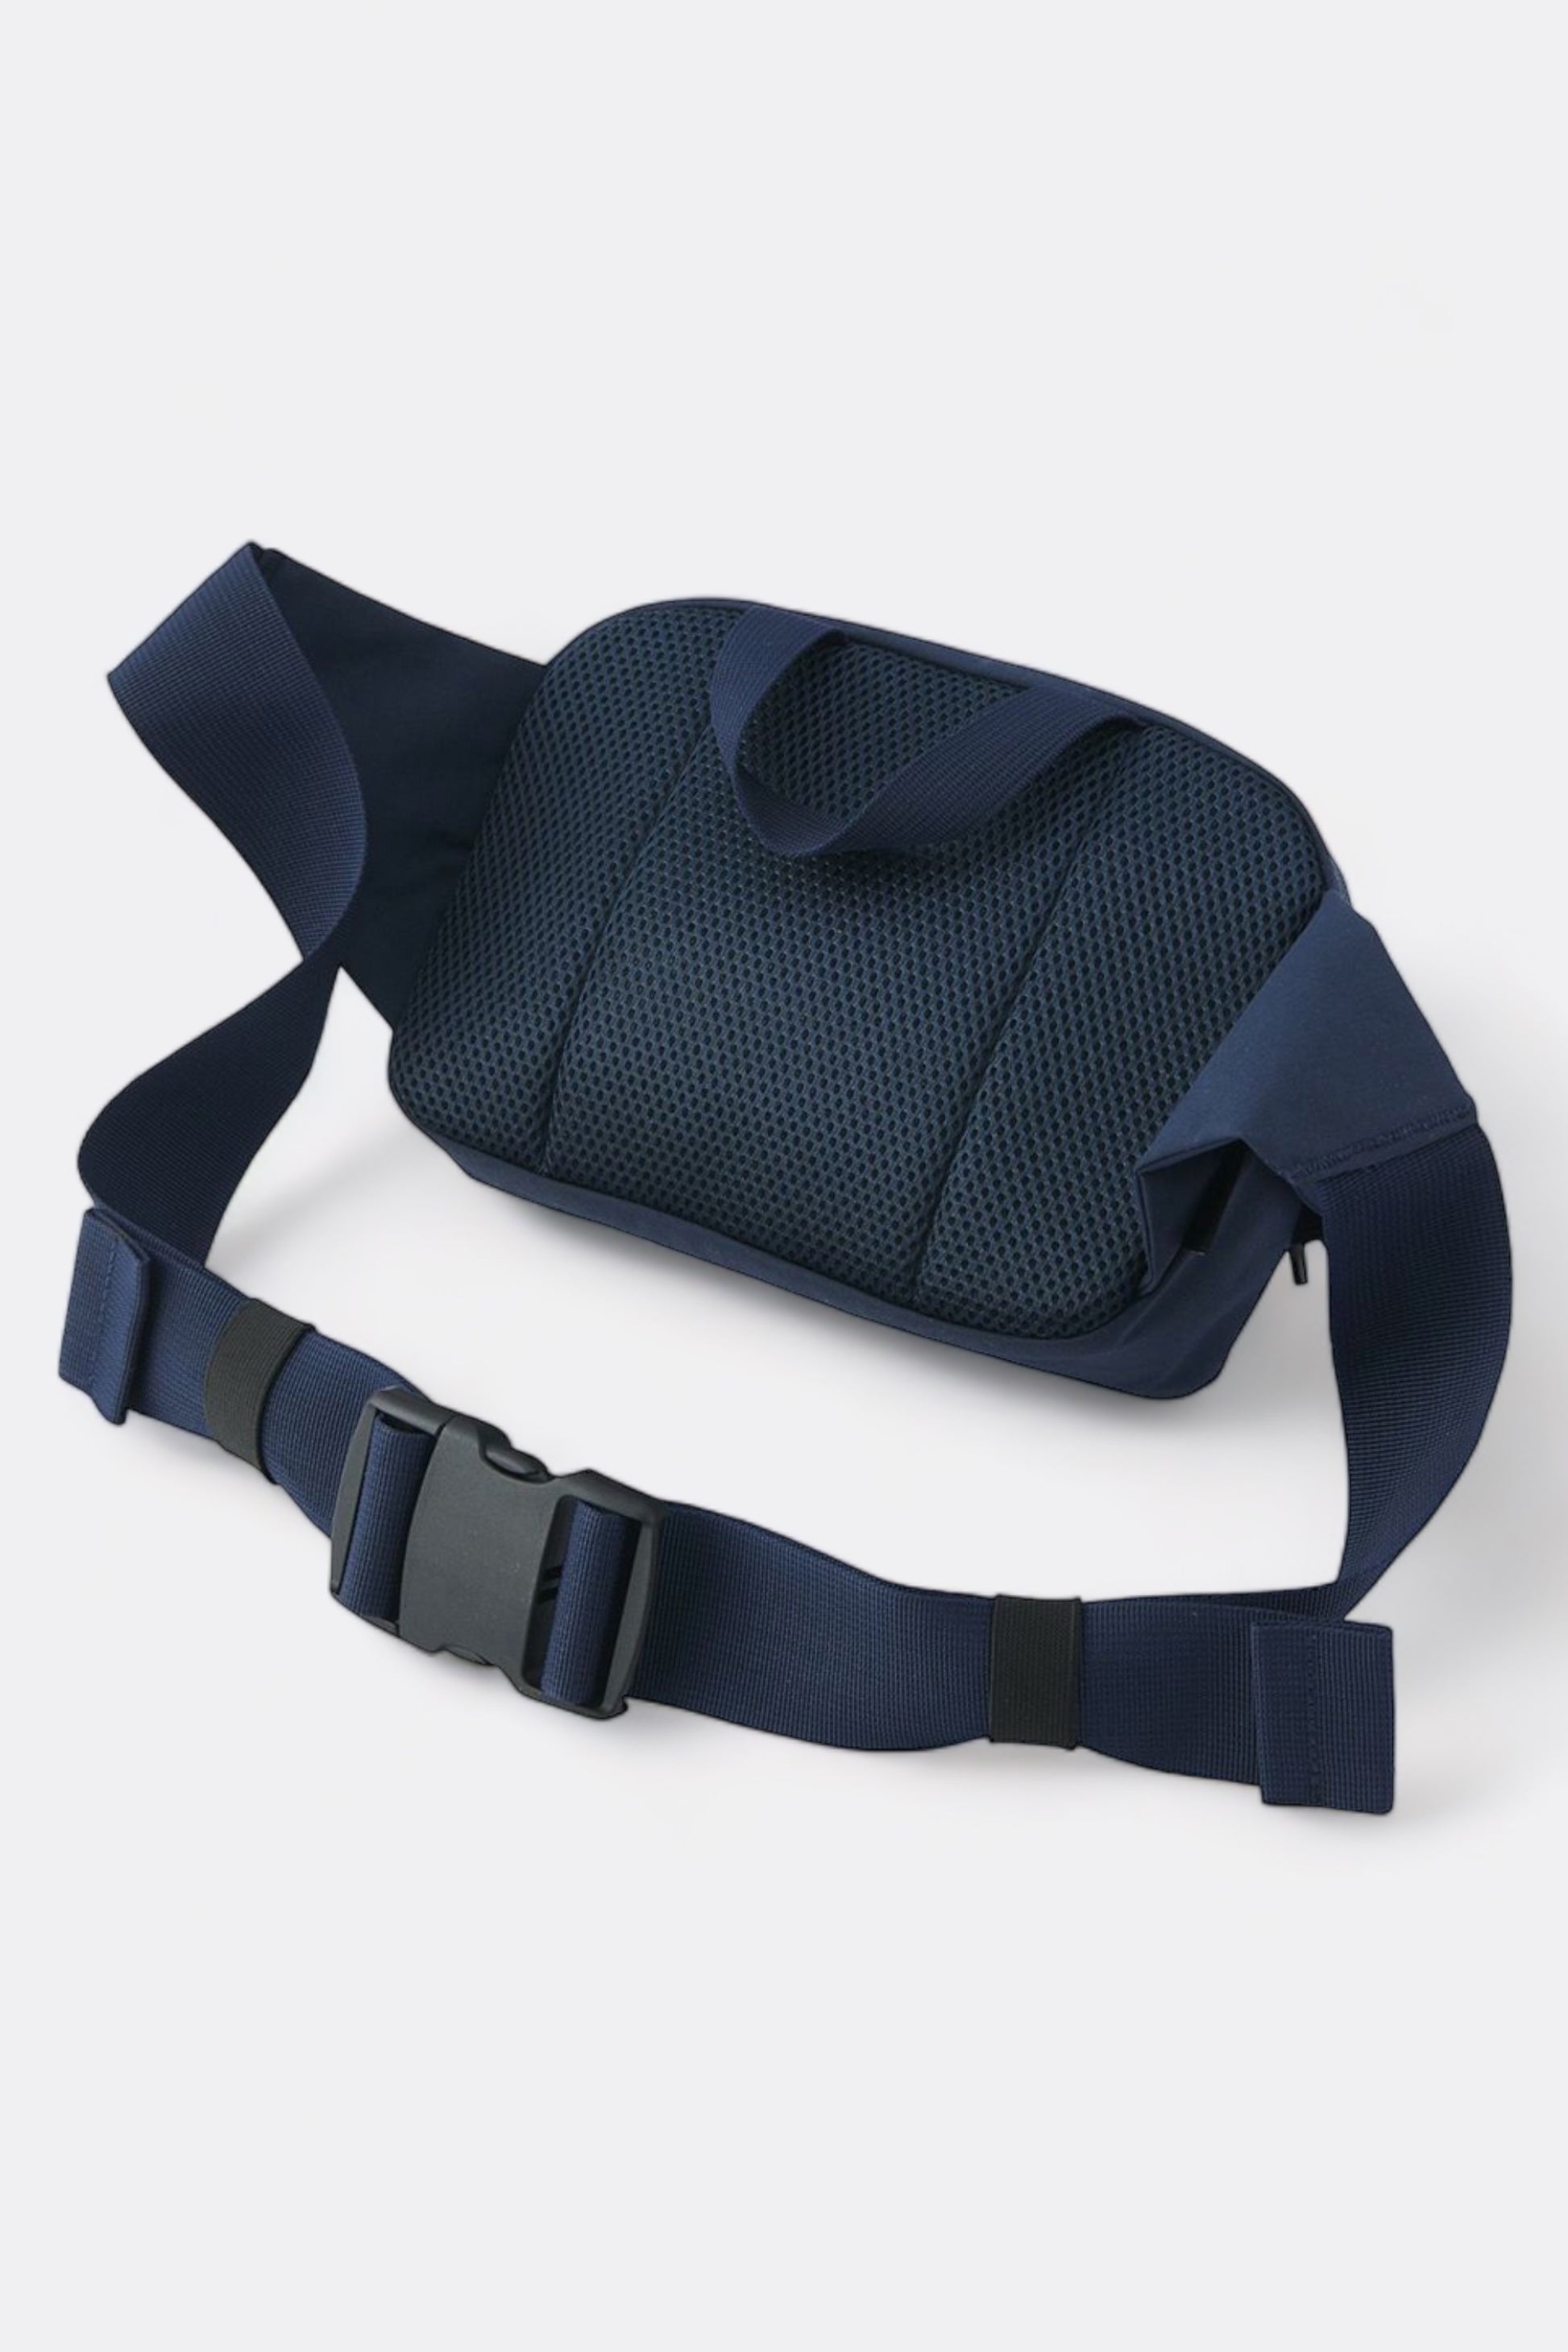 Gramicci - Cordura Hiker Bag (Navy)